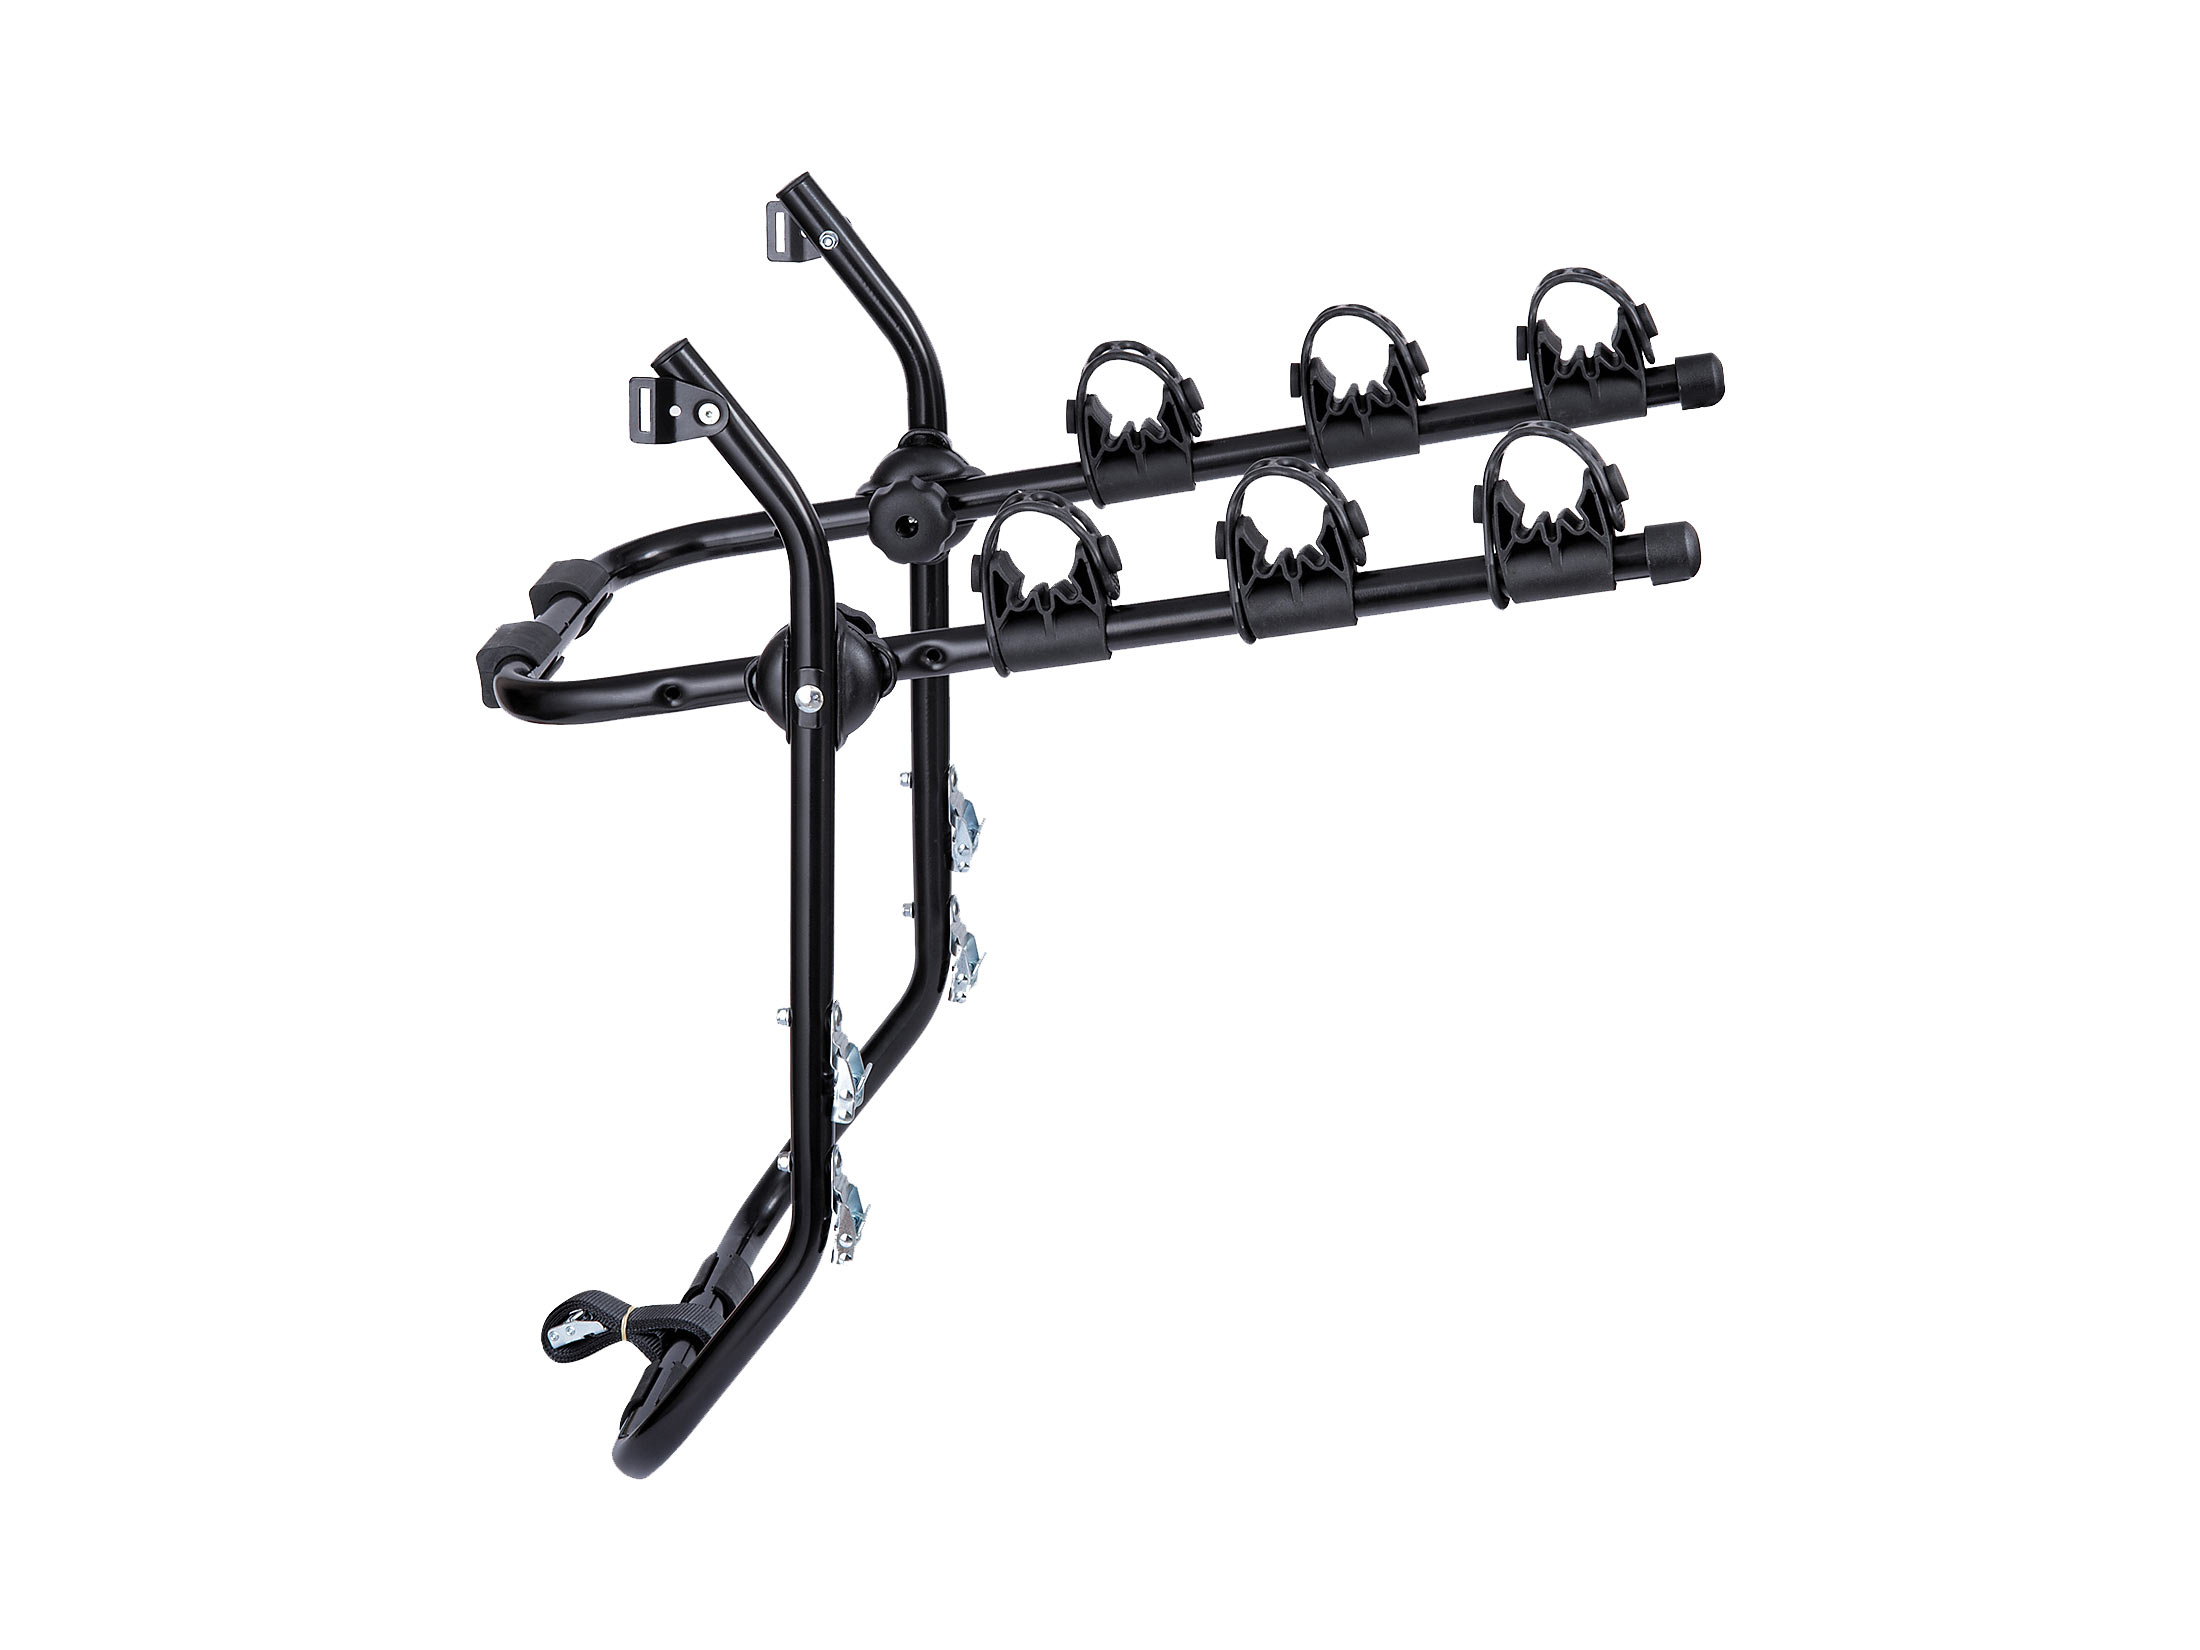 GC Accessories BC 5 3-Bike Hanging Trunk Bike Rack - Black